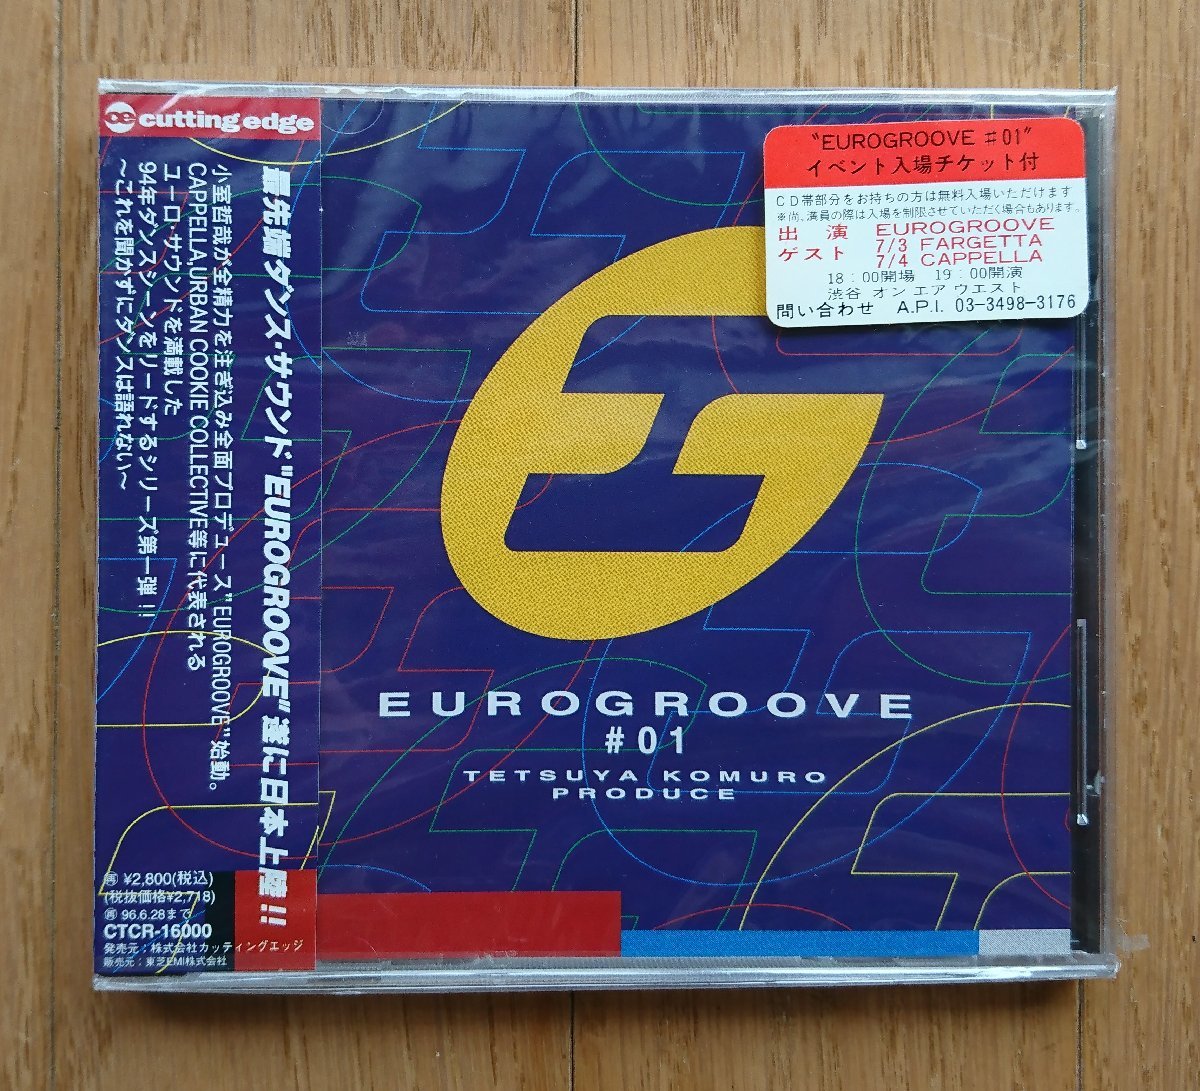 【CD・サンプル盤】ユーログルーヴ01 -EUROGROOVE #01- CTCR-16000 ※未開封です_画像1